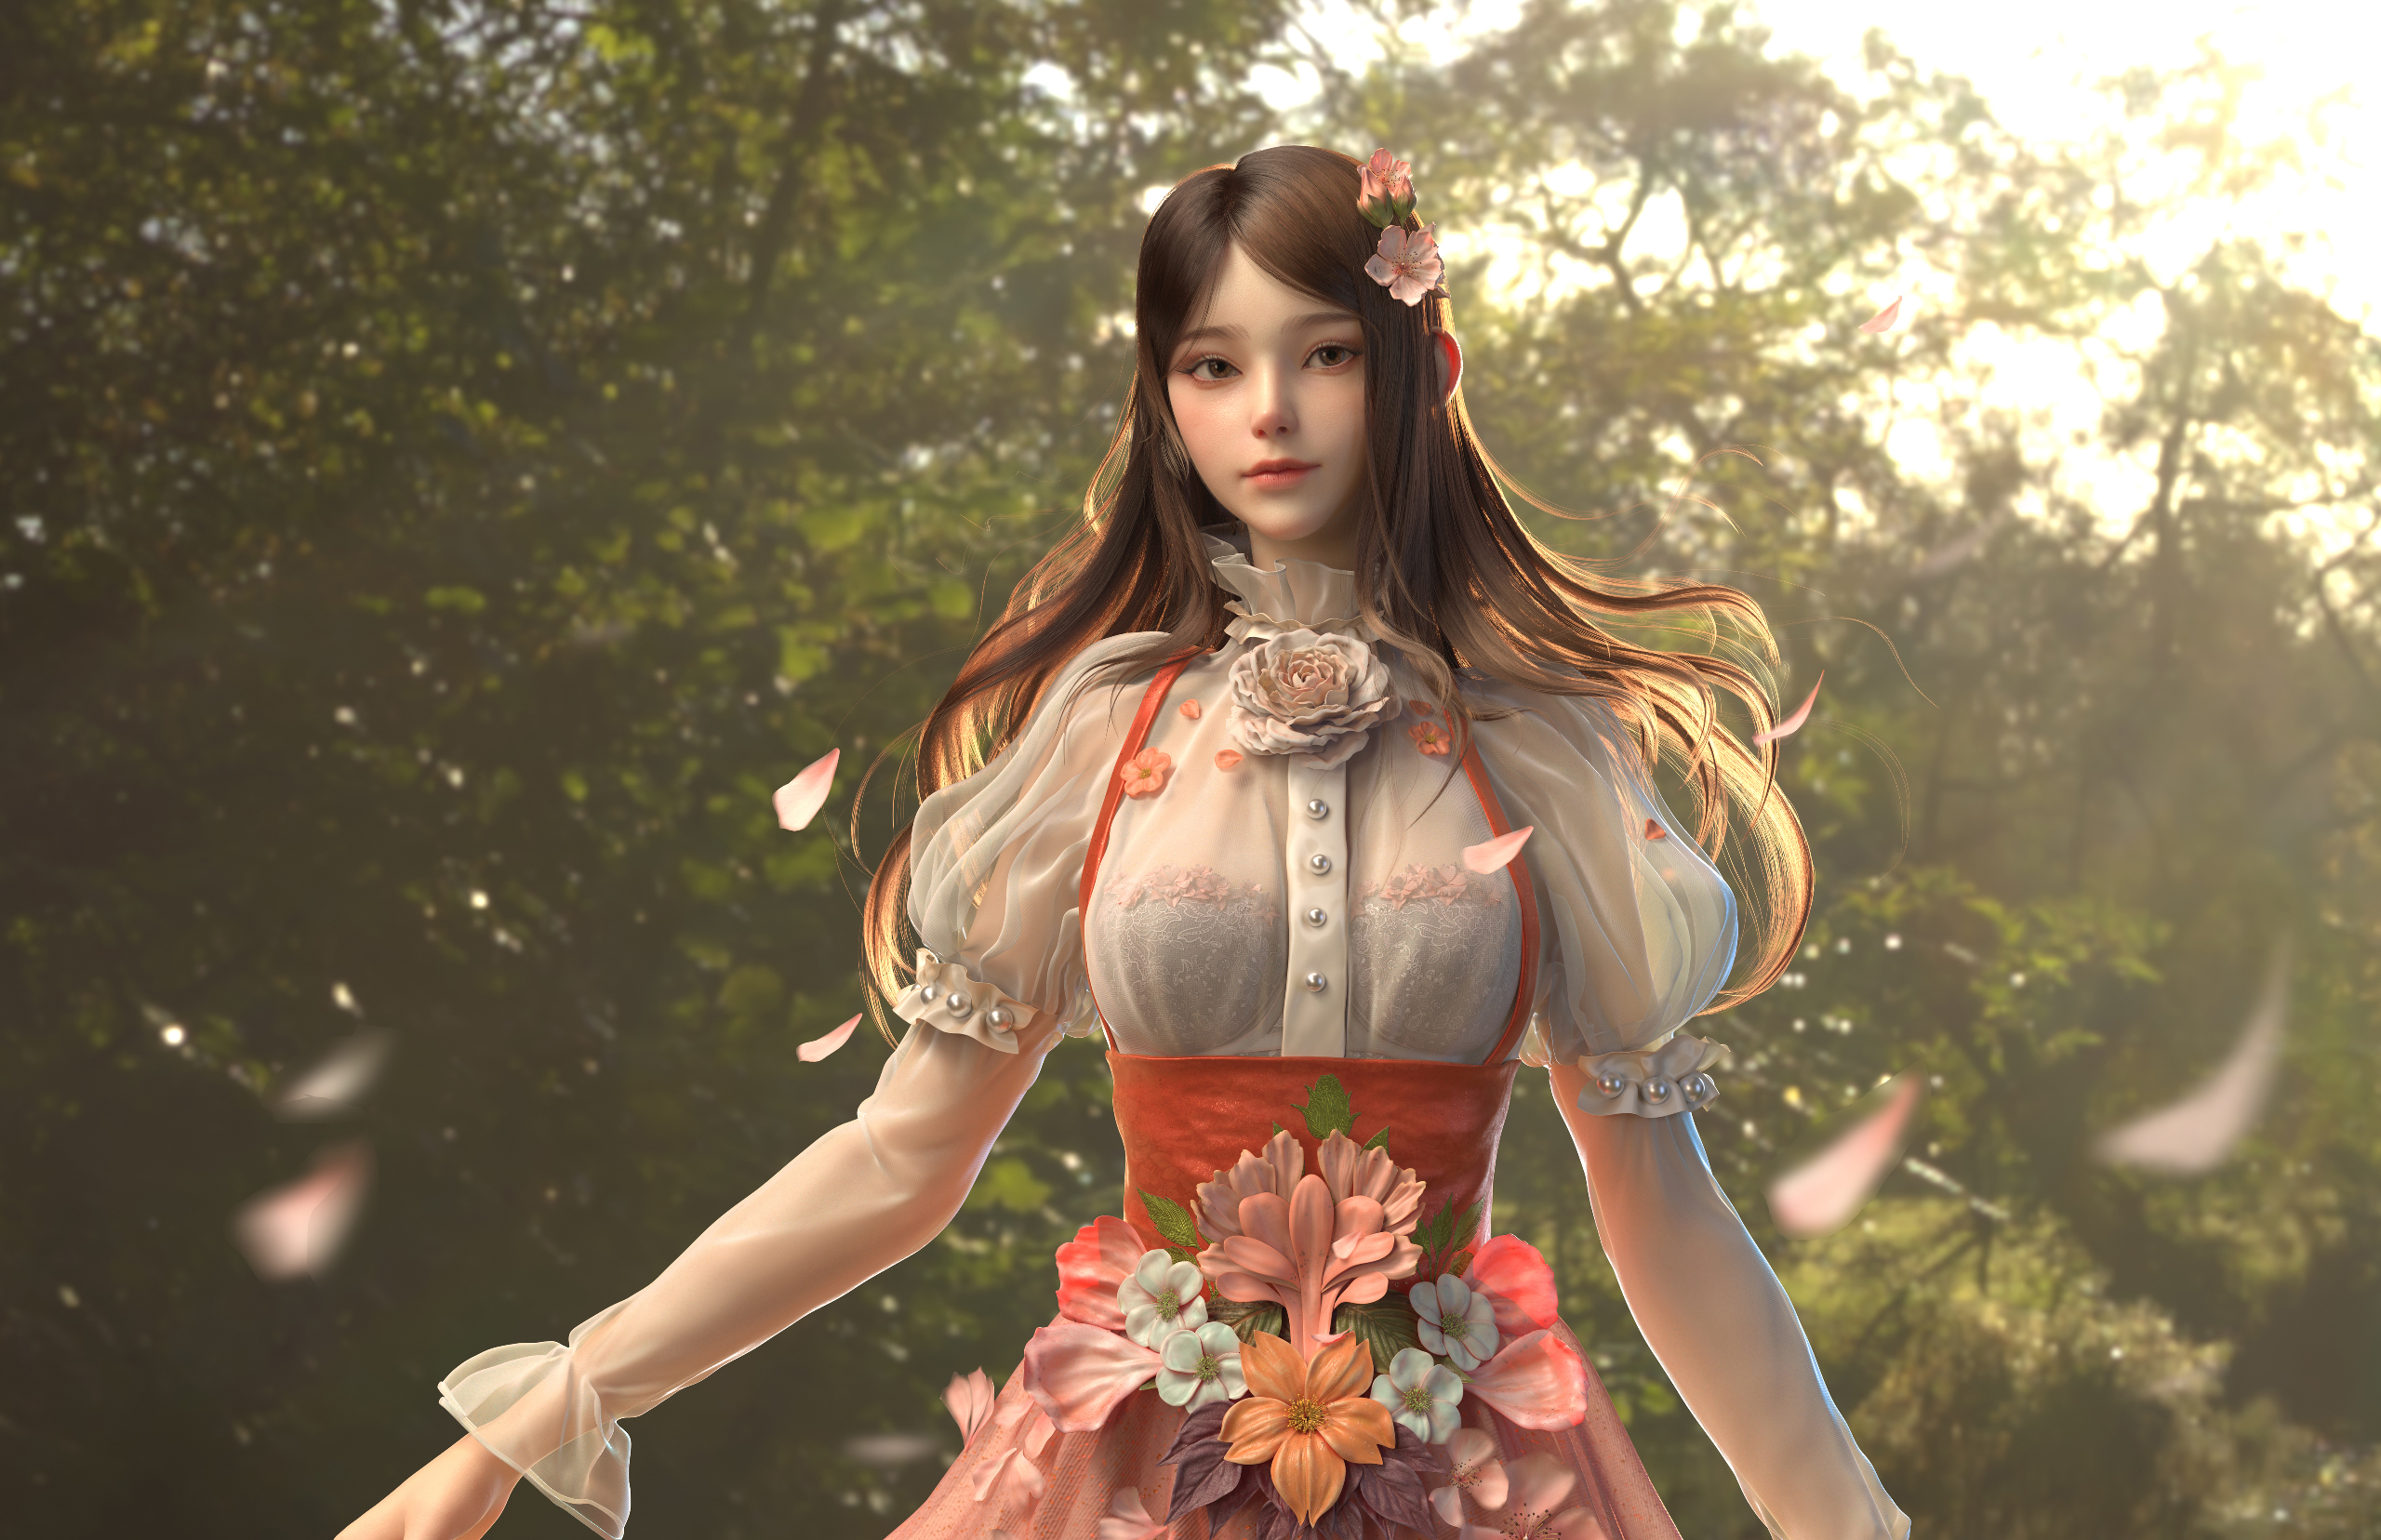 Artwork Asian Women Digital Art Long Hair Dress Women Outdoors Fantasy Art Fantasy Girl CGi Yangzhen 2560x1656